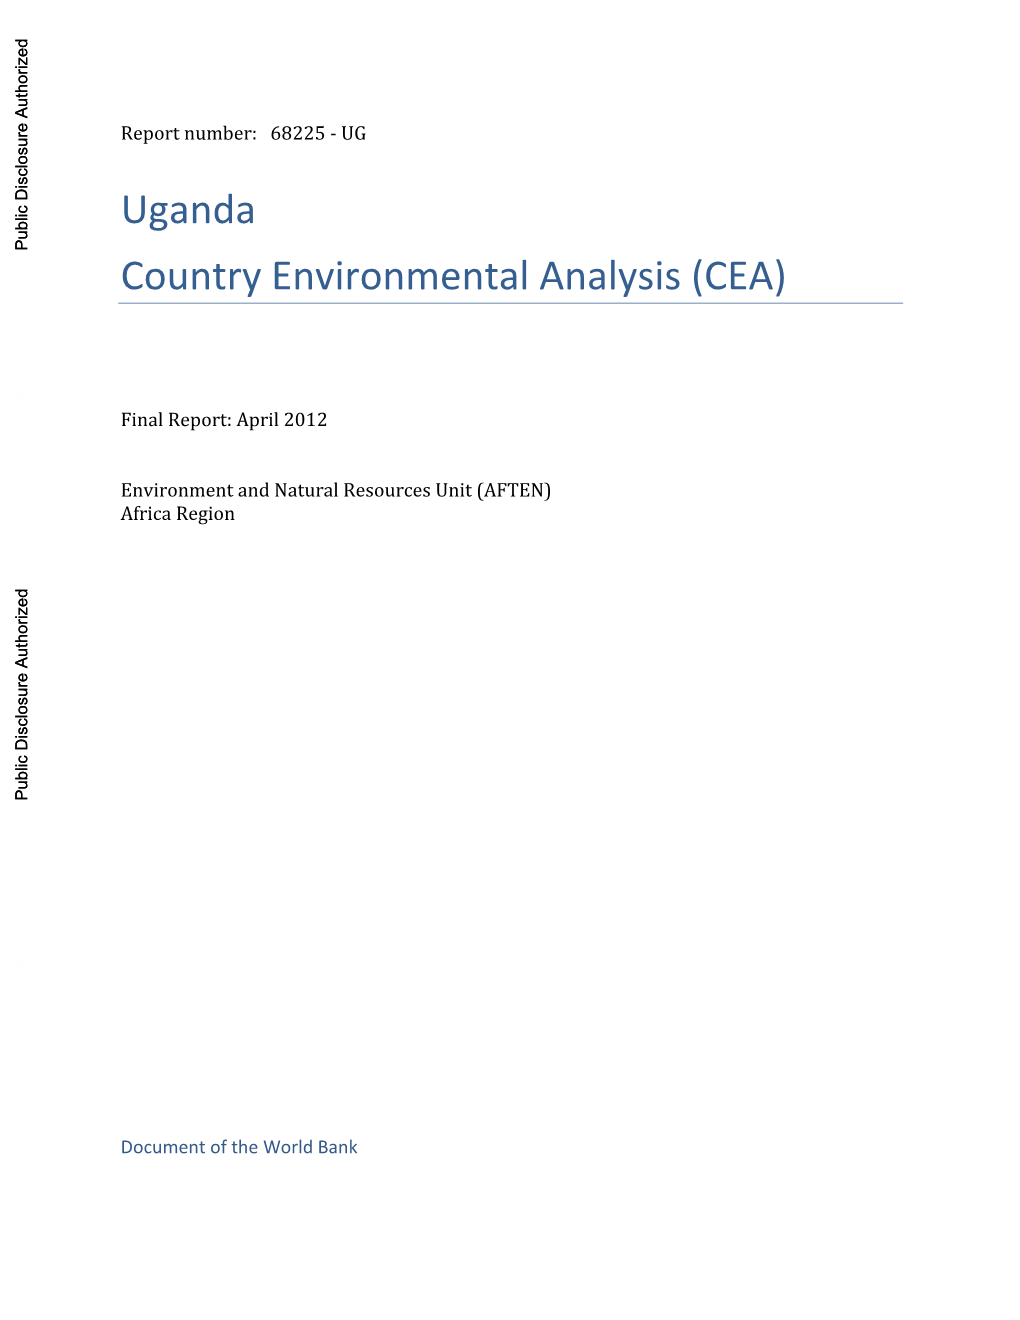 Uganda Country Environmental Analysis (CEA)